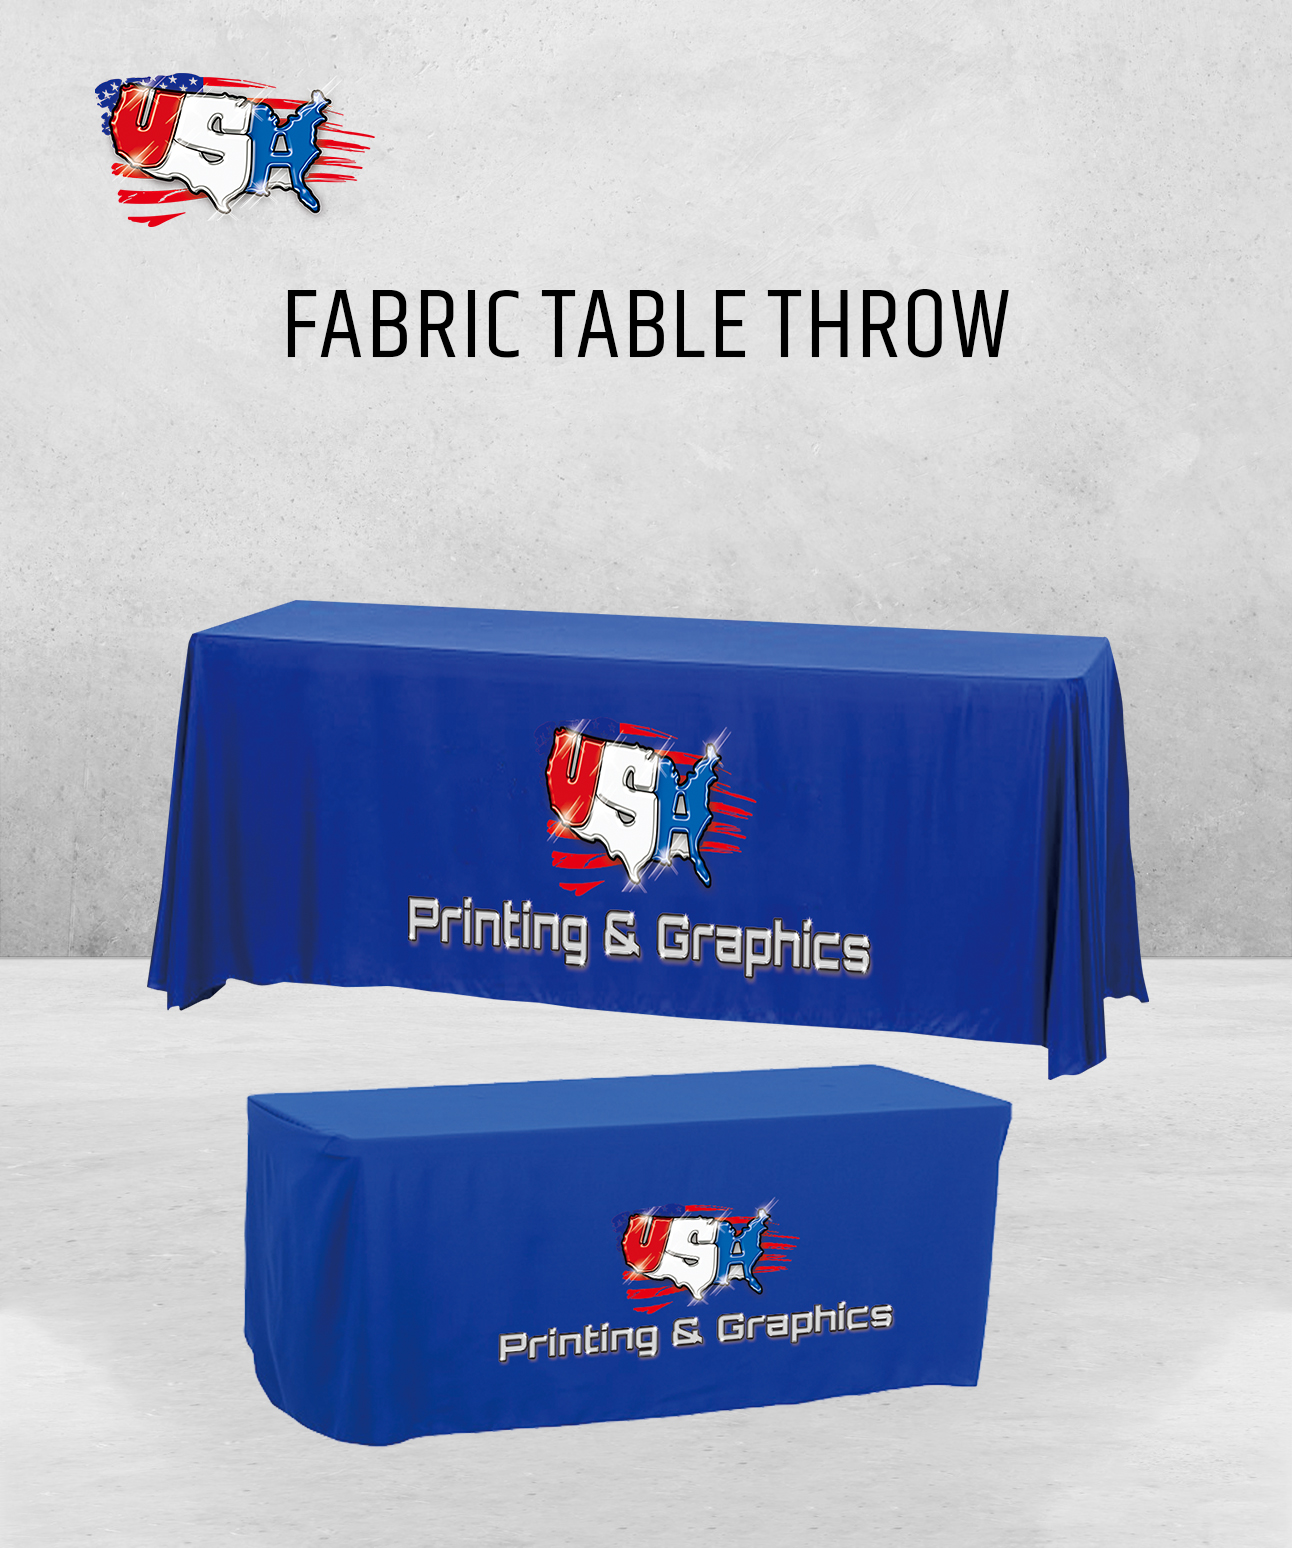 Fabric Table Throw